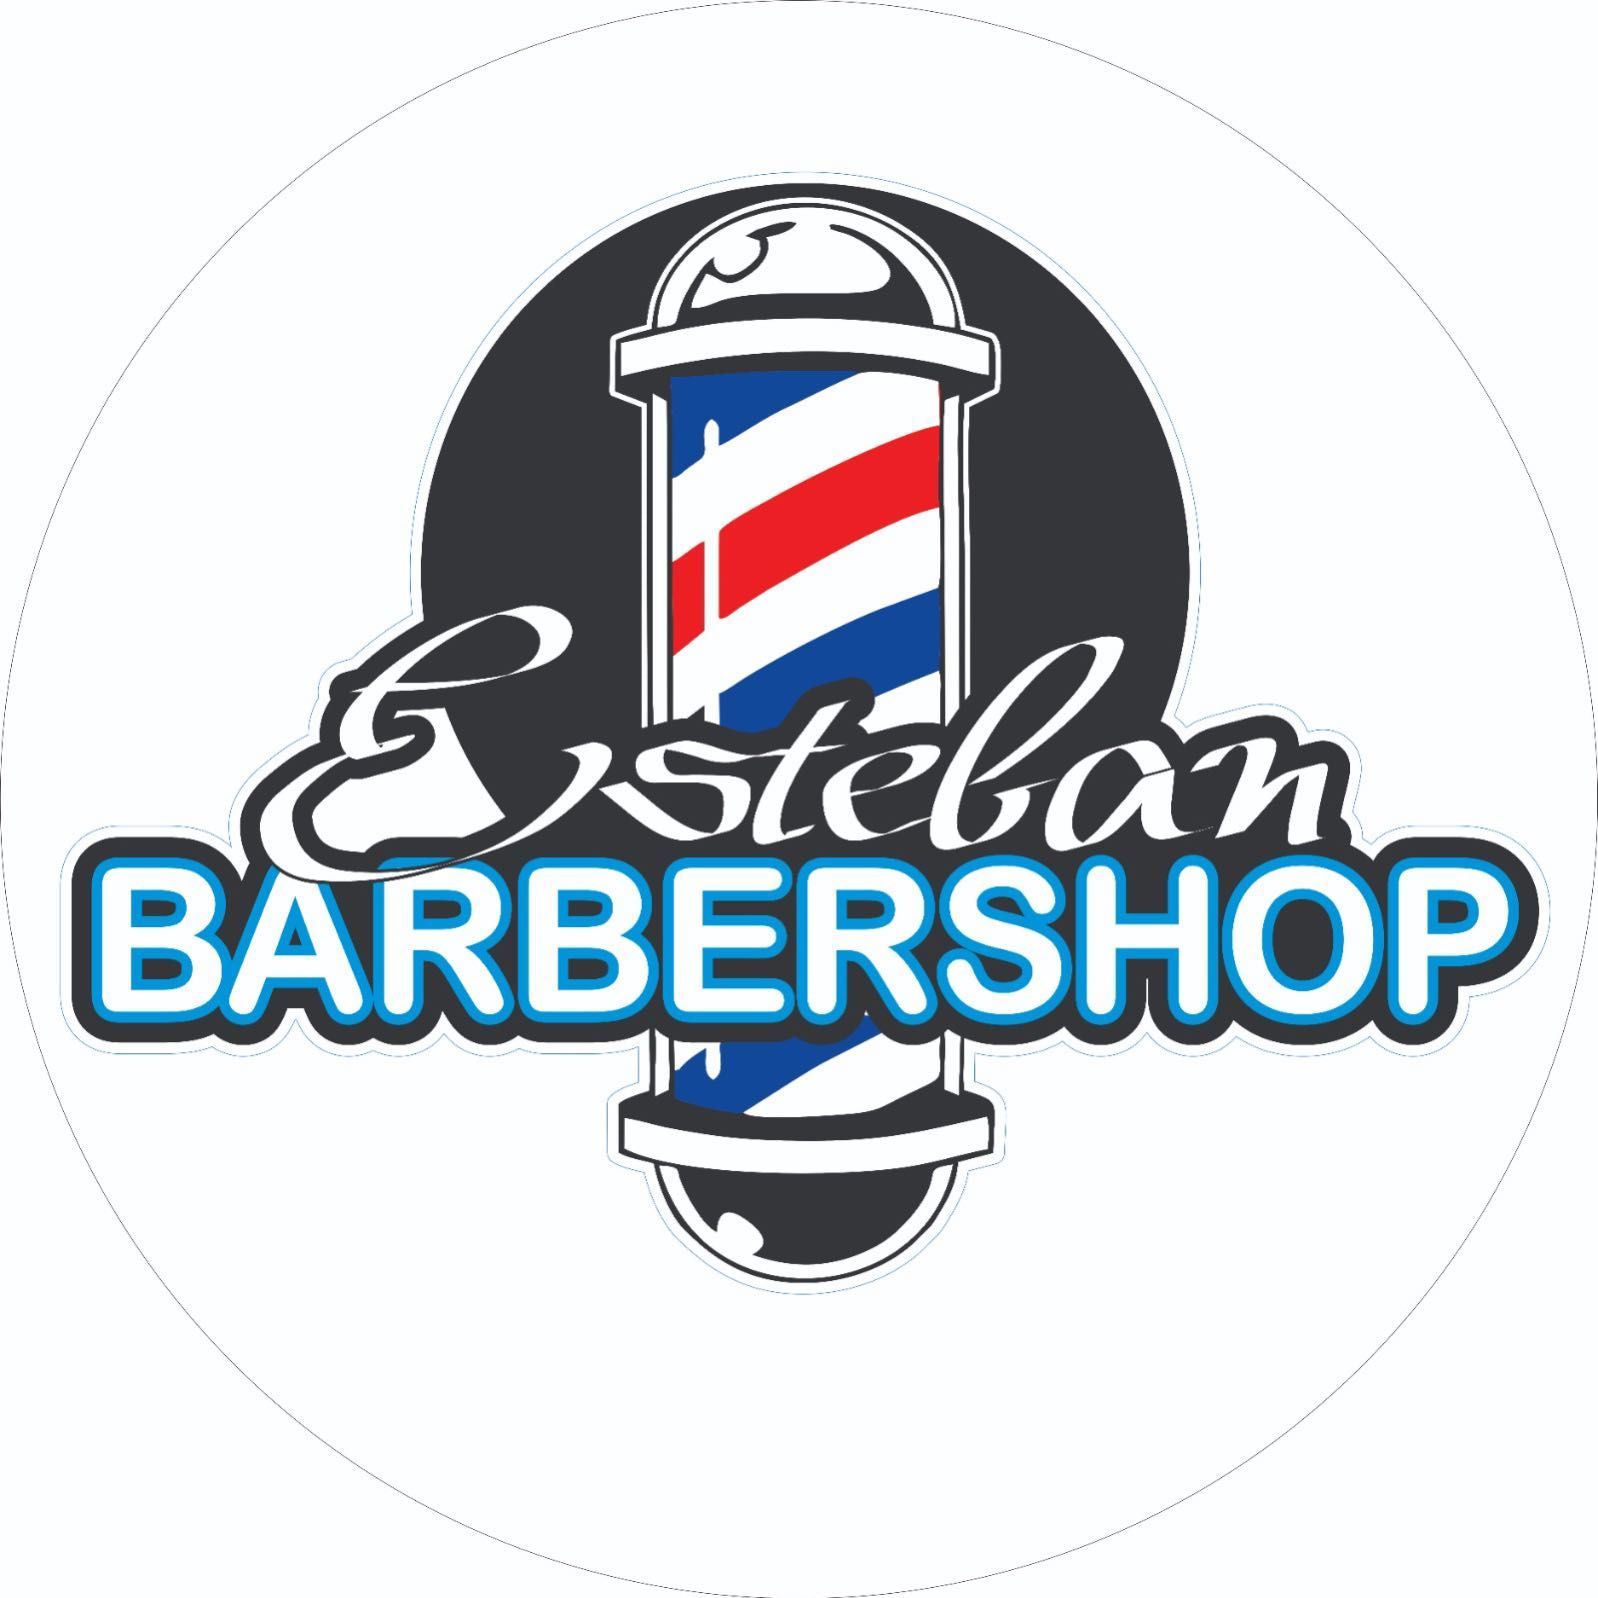 Esteban Barbershop, 134 S Broadway, Lawrence, 01843